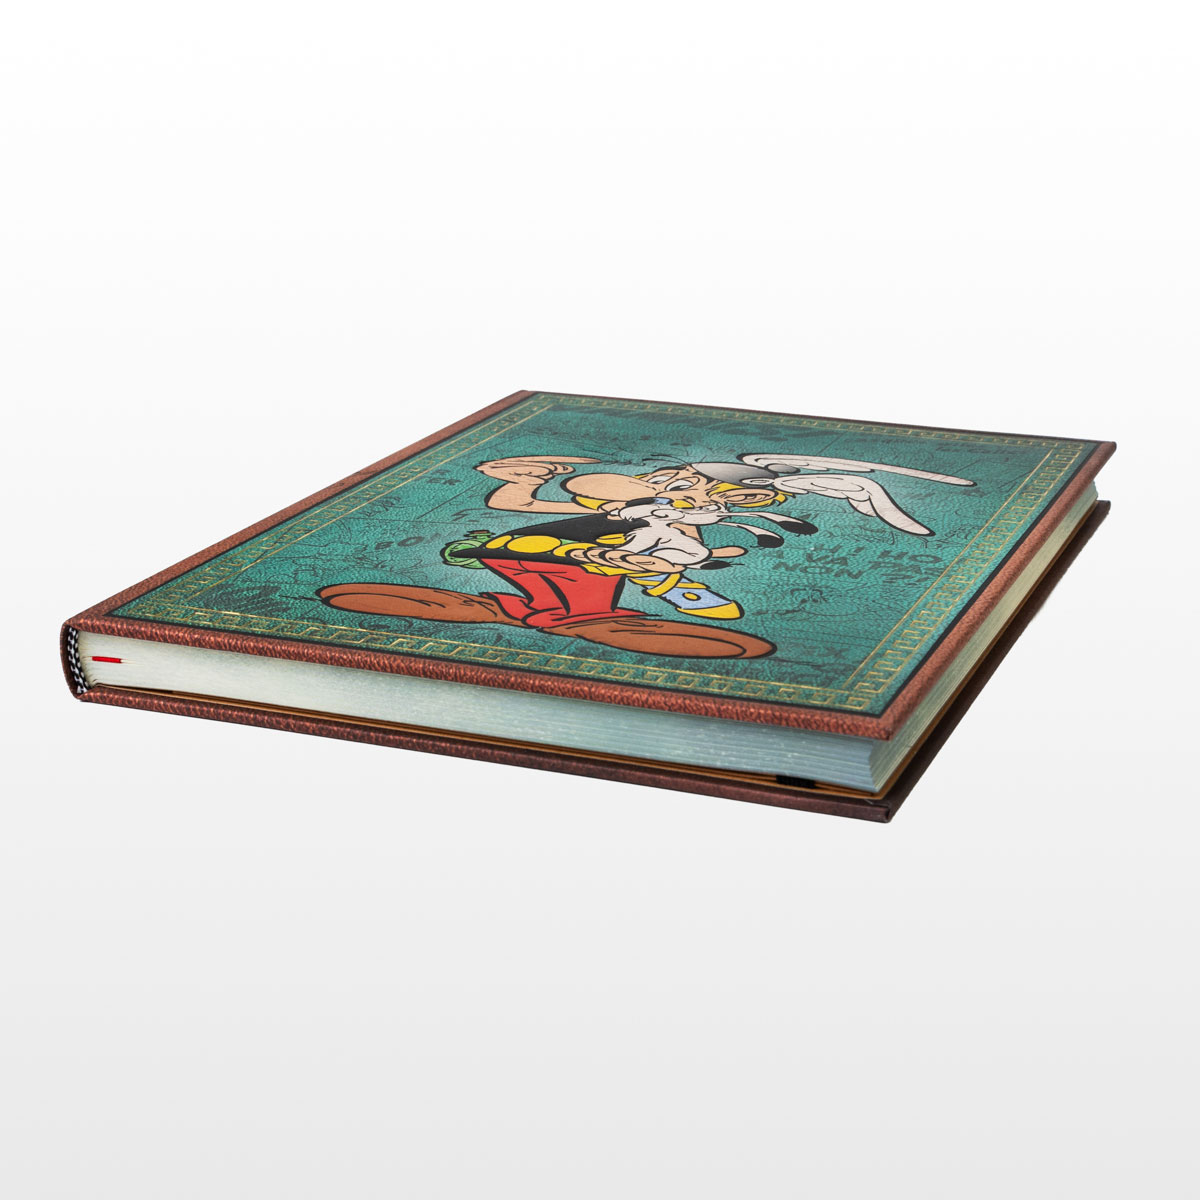 Notebook Uderzo: Asterix the Gaul (detail)